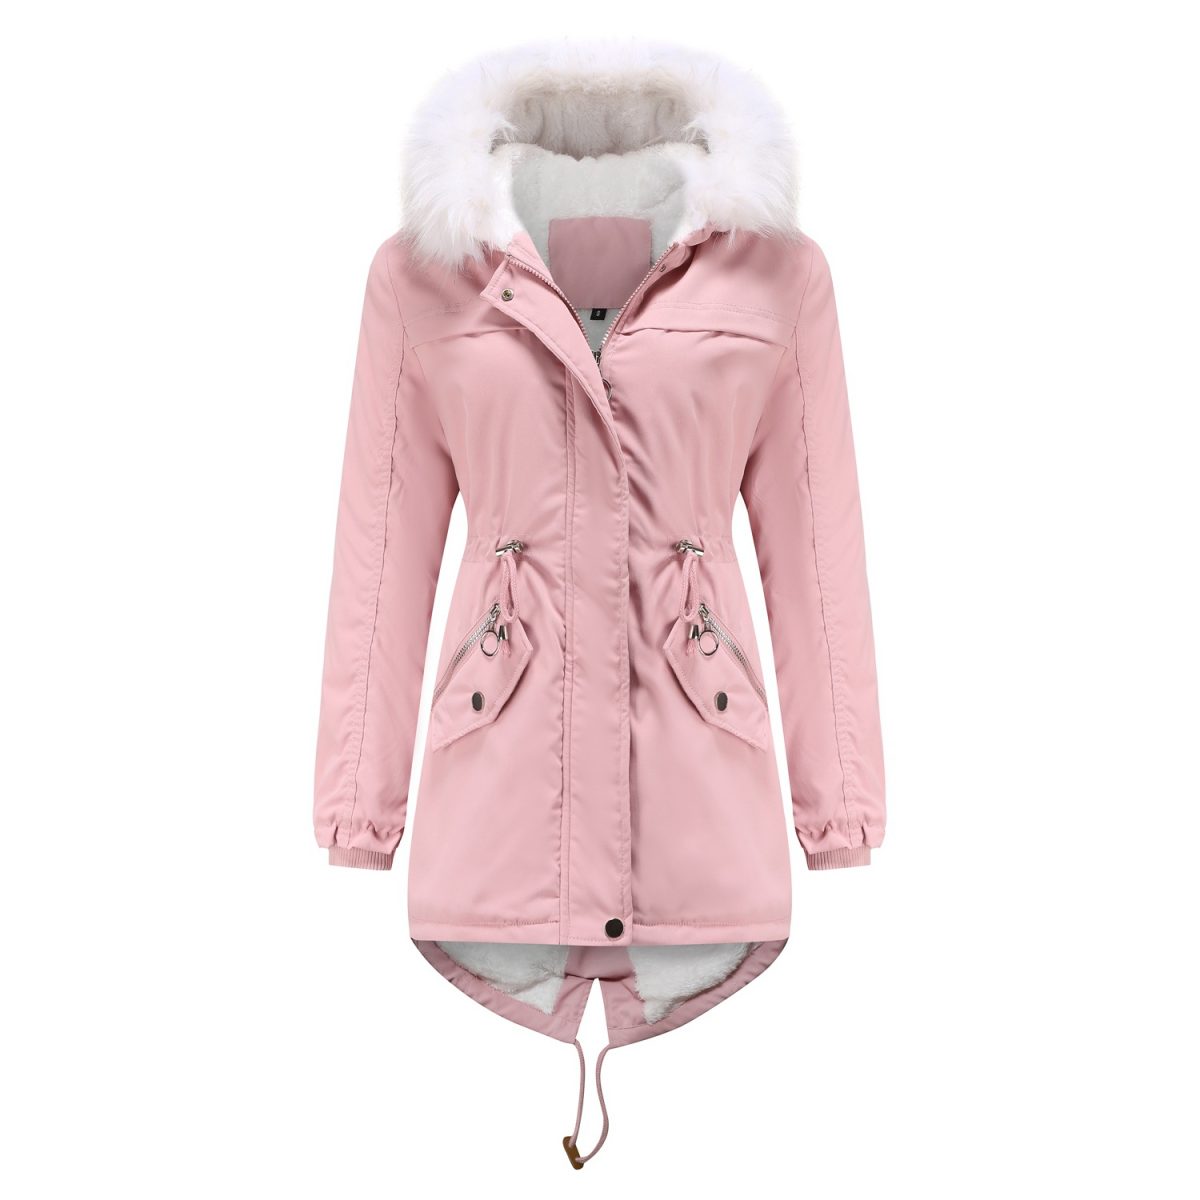 Parka Plus Size Mid-Length Fleece Lined Coat - Coats & Jackets - Uniqistic.com